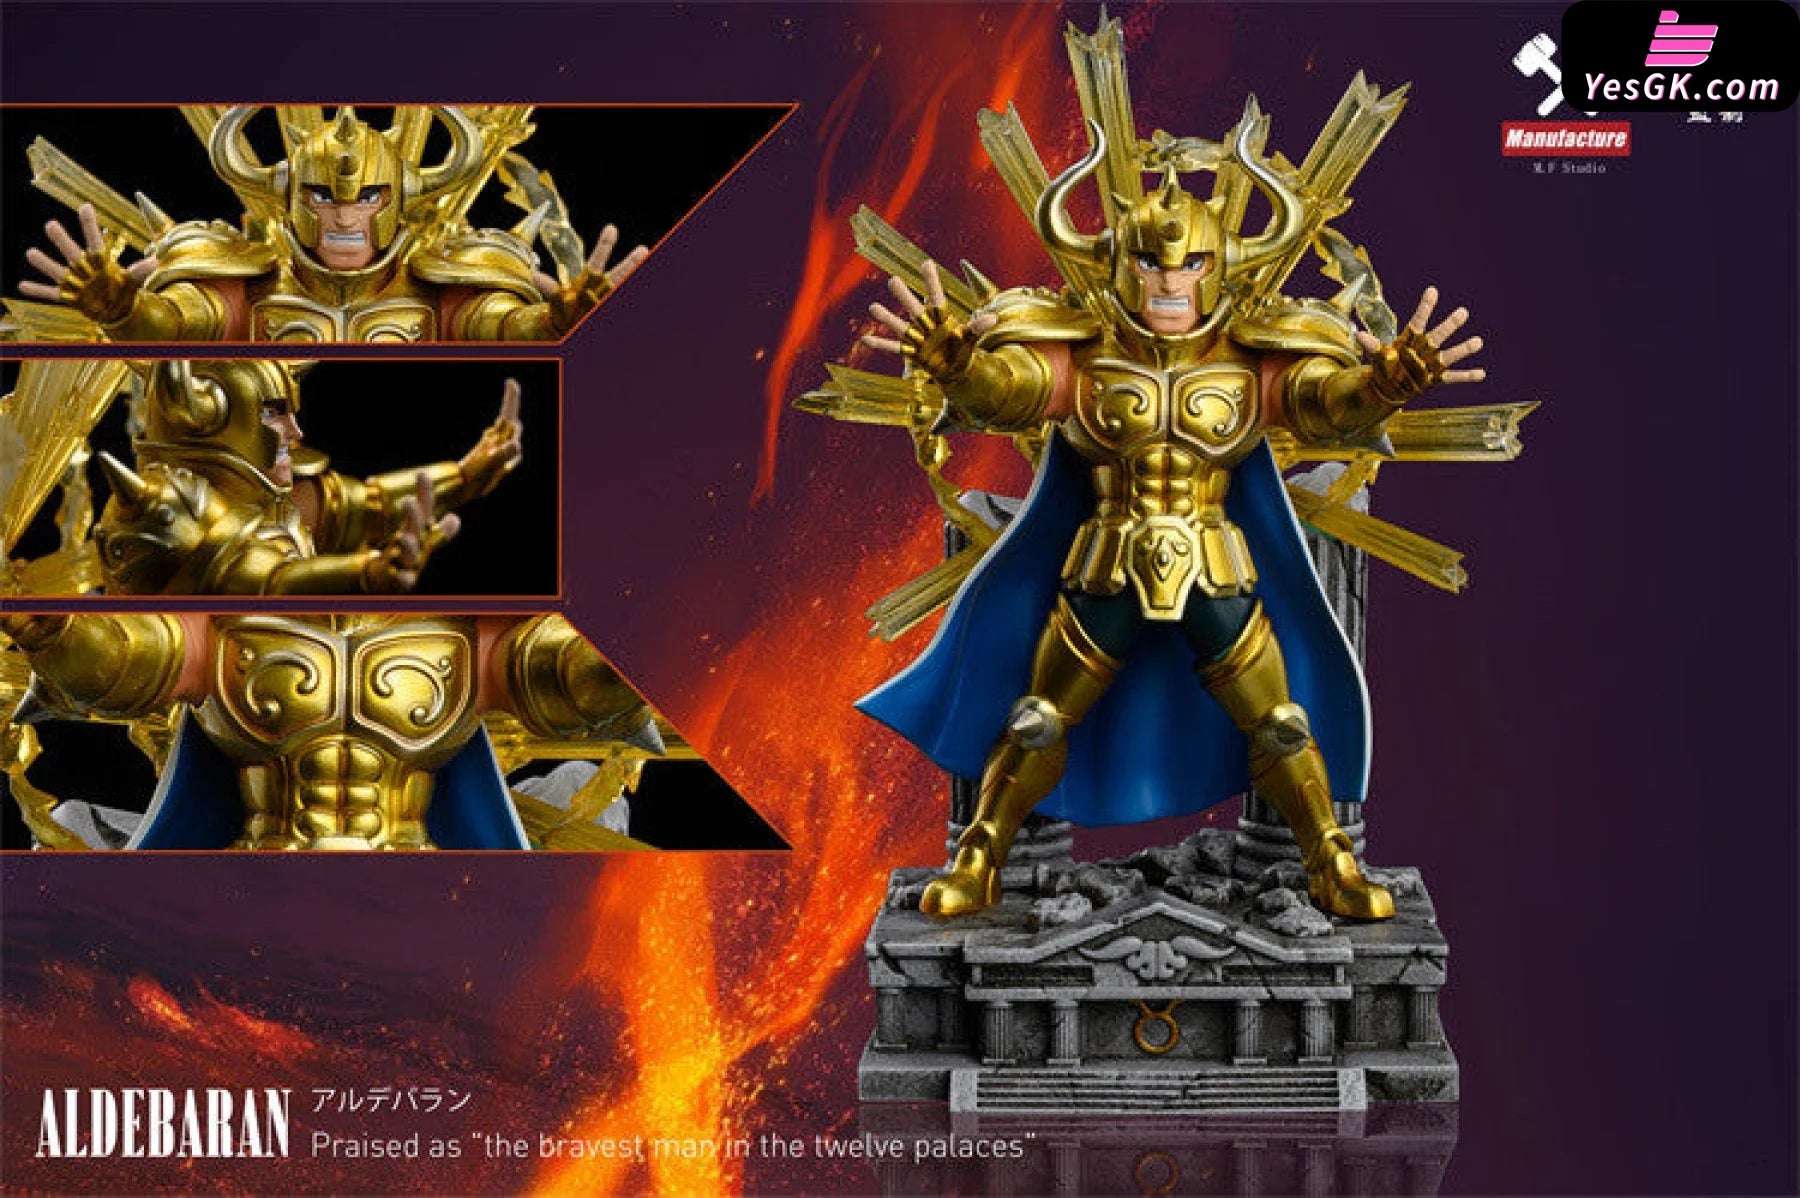 Saint Seiya Gold Taurus Aldebaran Resin Statue - Mf X Mke Studio [Pre-Order Closed] Full Payment